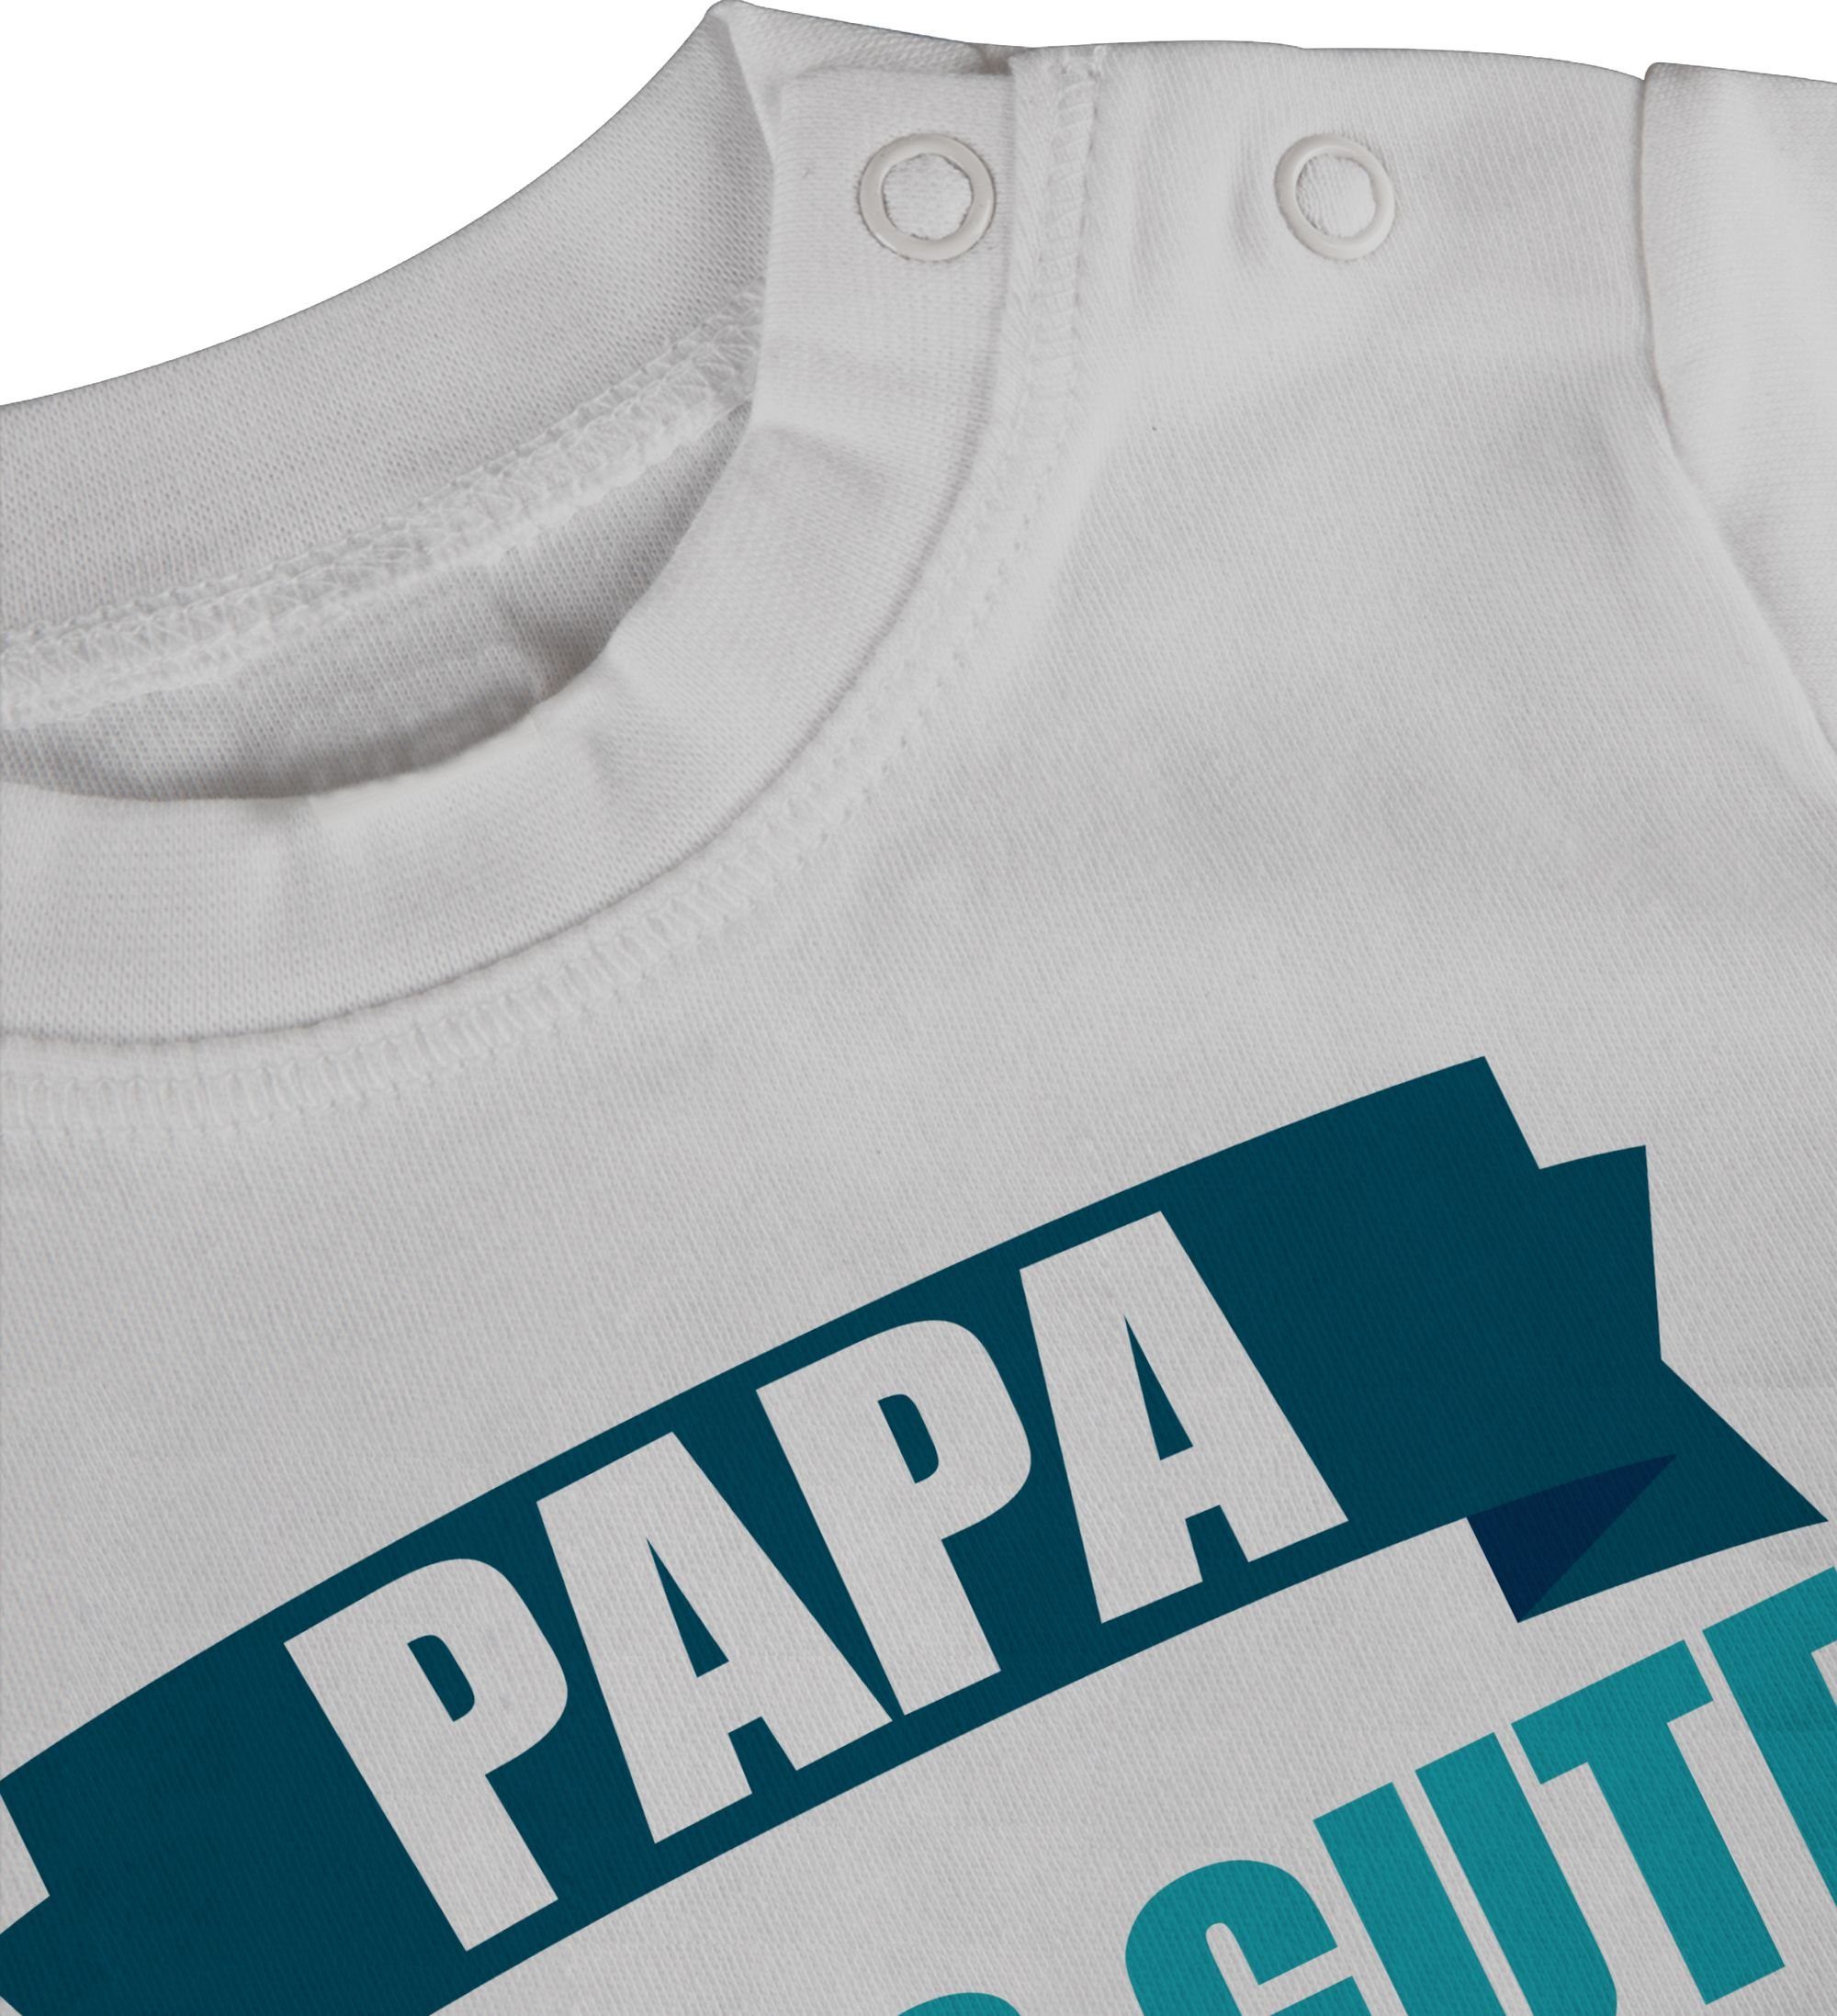 1. Baby 3 Vatertag T-Shirt Vatertag Shirtracer Geschenk Weiß